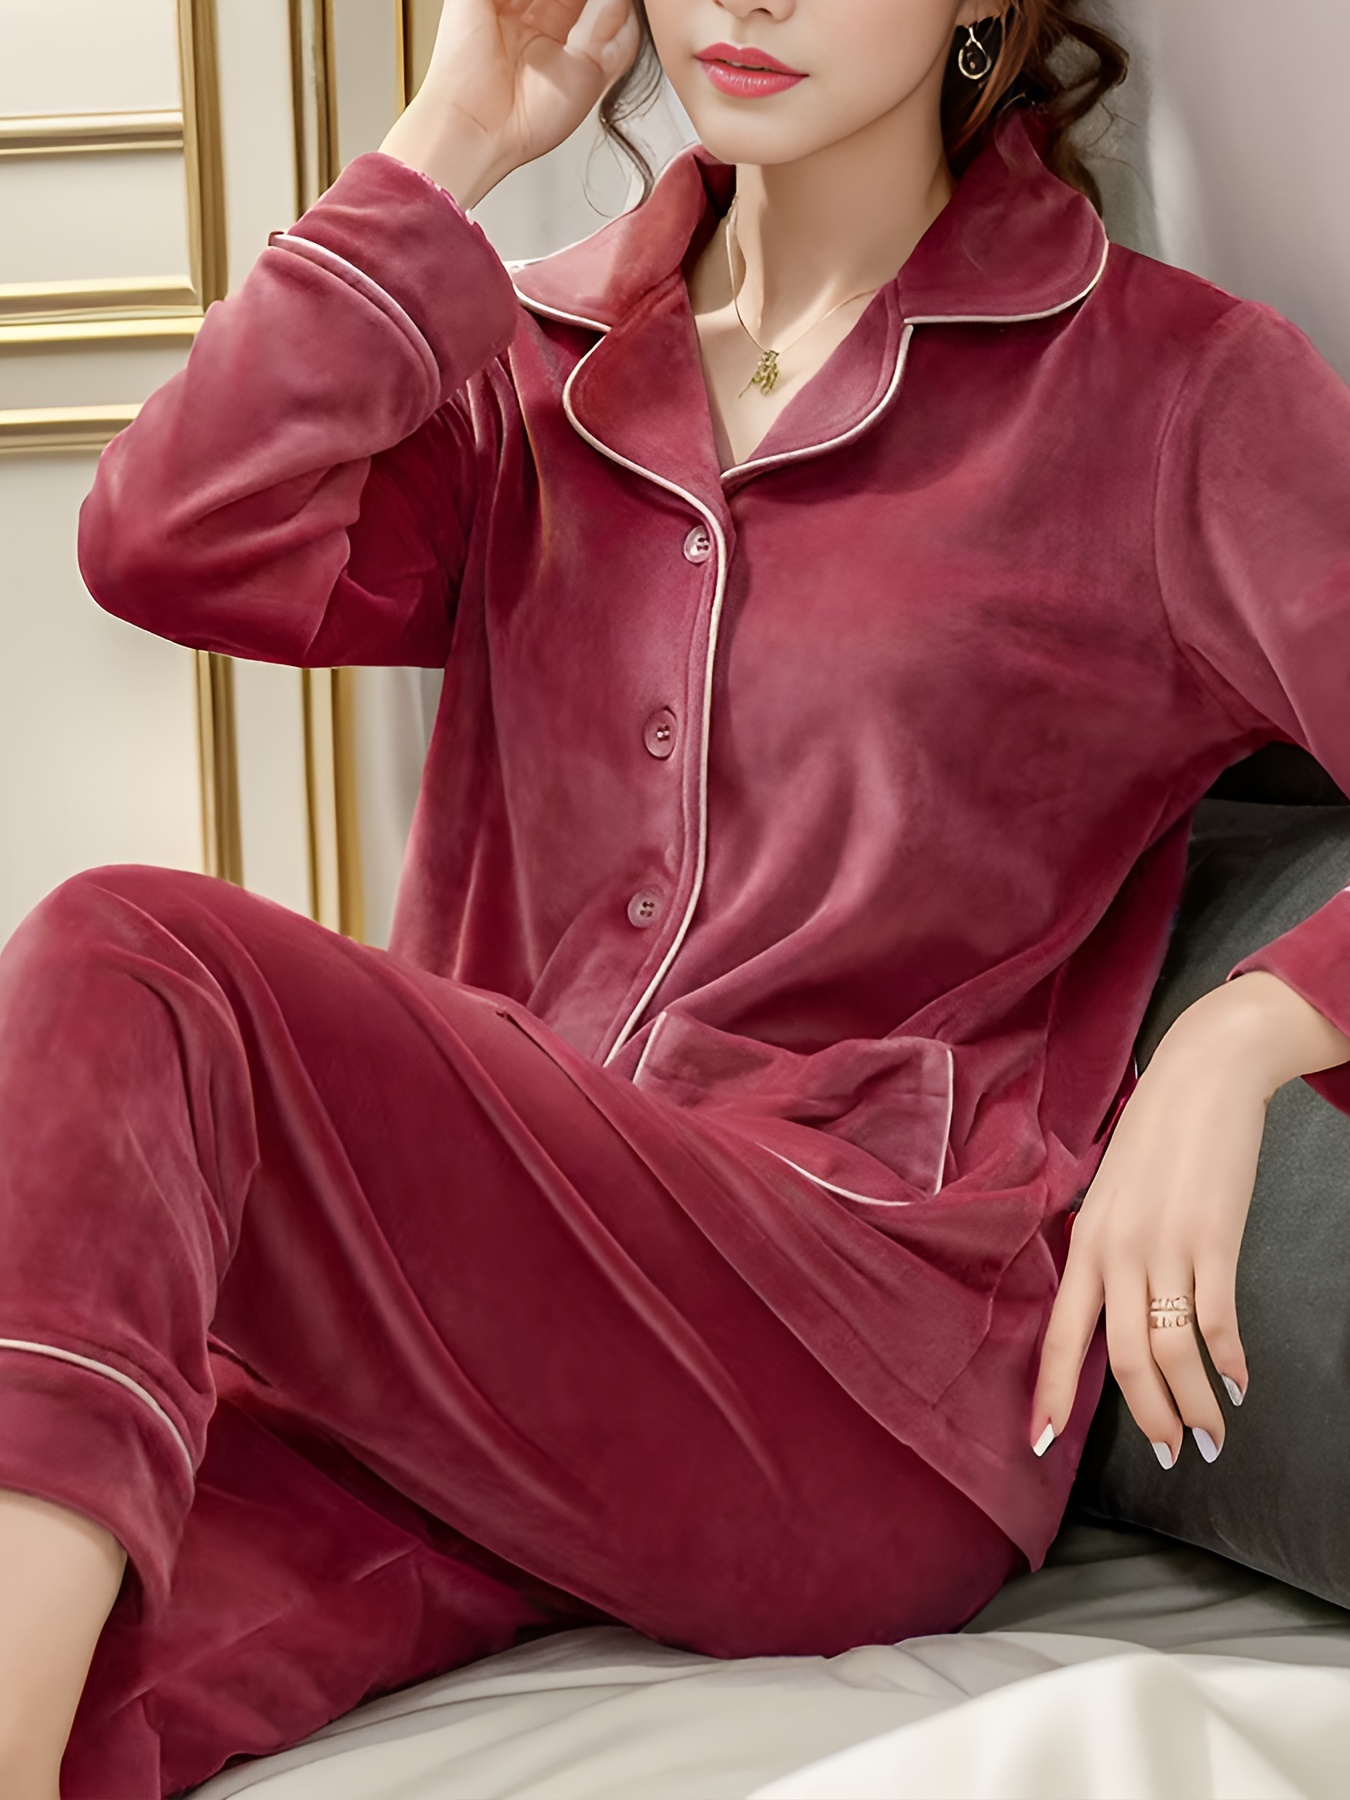 DanceeMangoo Cotton Pijama Set Womens Sleepwear Tops Long Pyjamas Set  Autumn Winter Homewear Women Casual Sleepwear Nightwear Pajama Sets